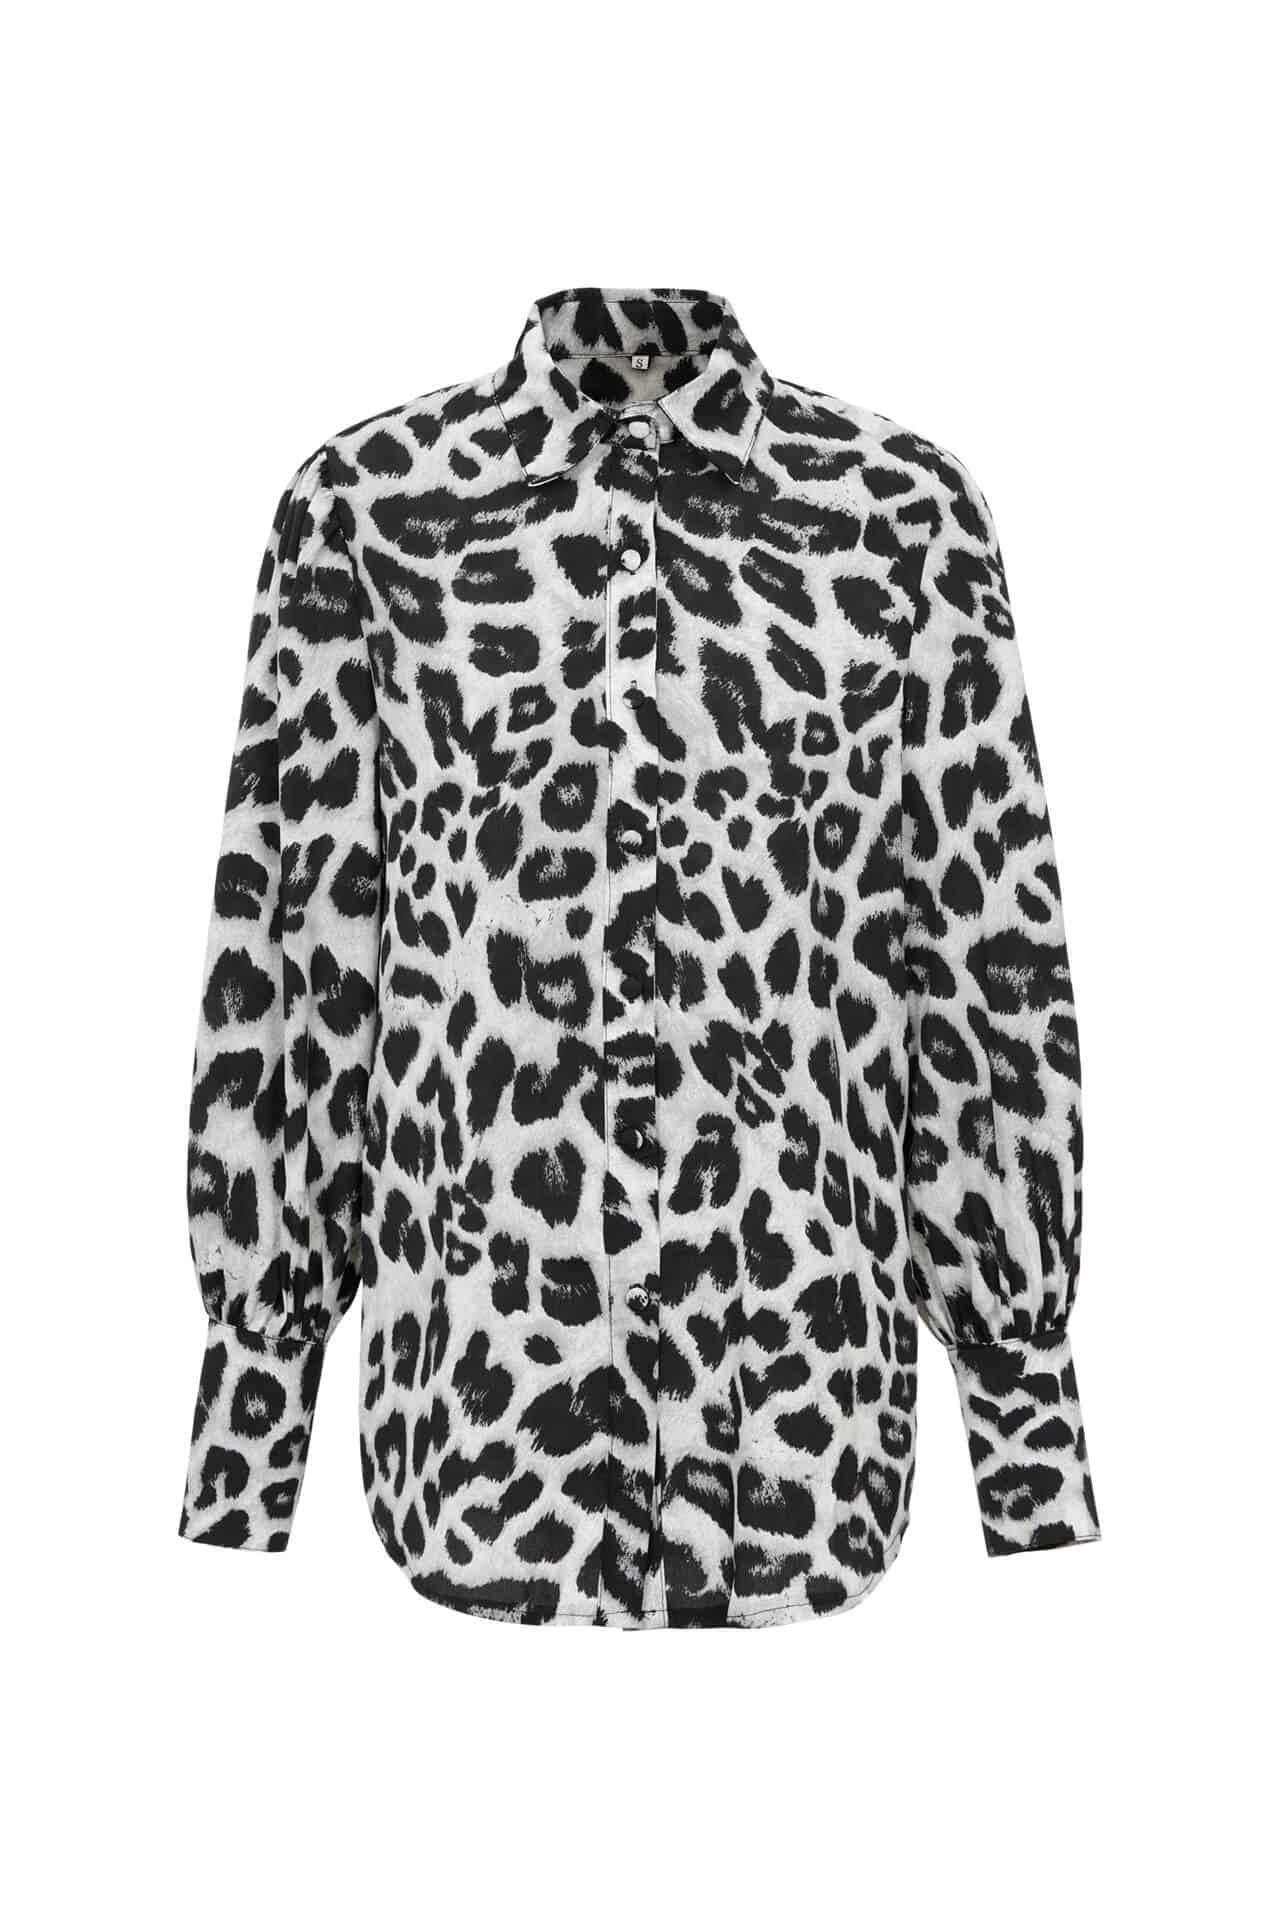 Toperth Lapel Casual Leopard Print Top Shirt – TOPERTH